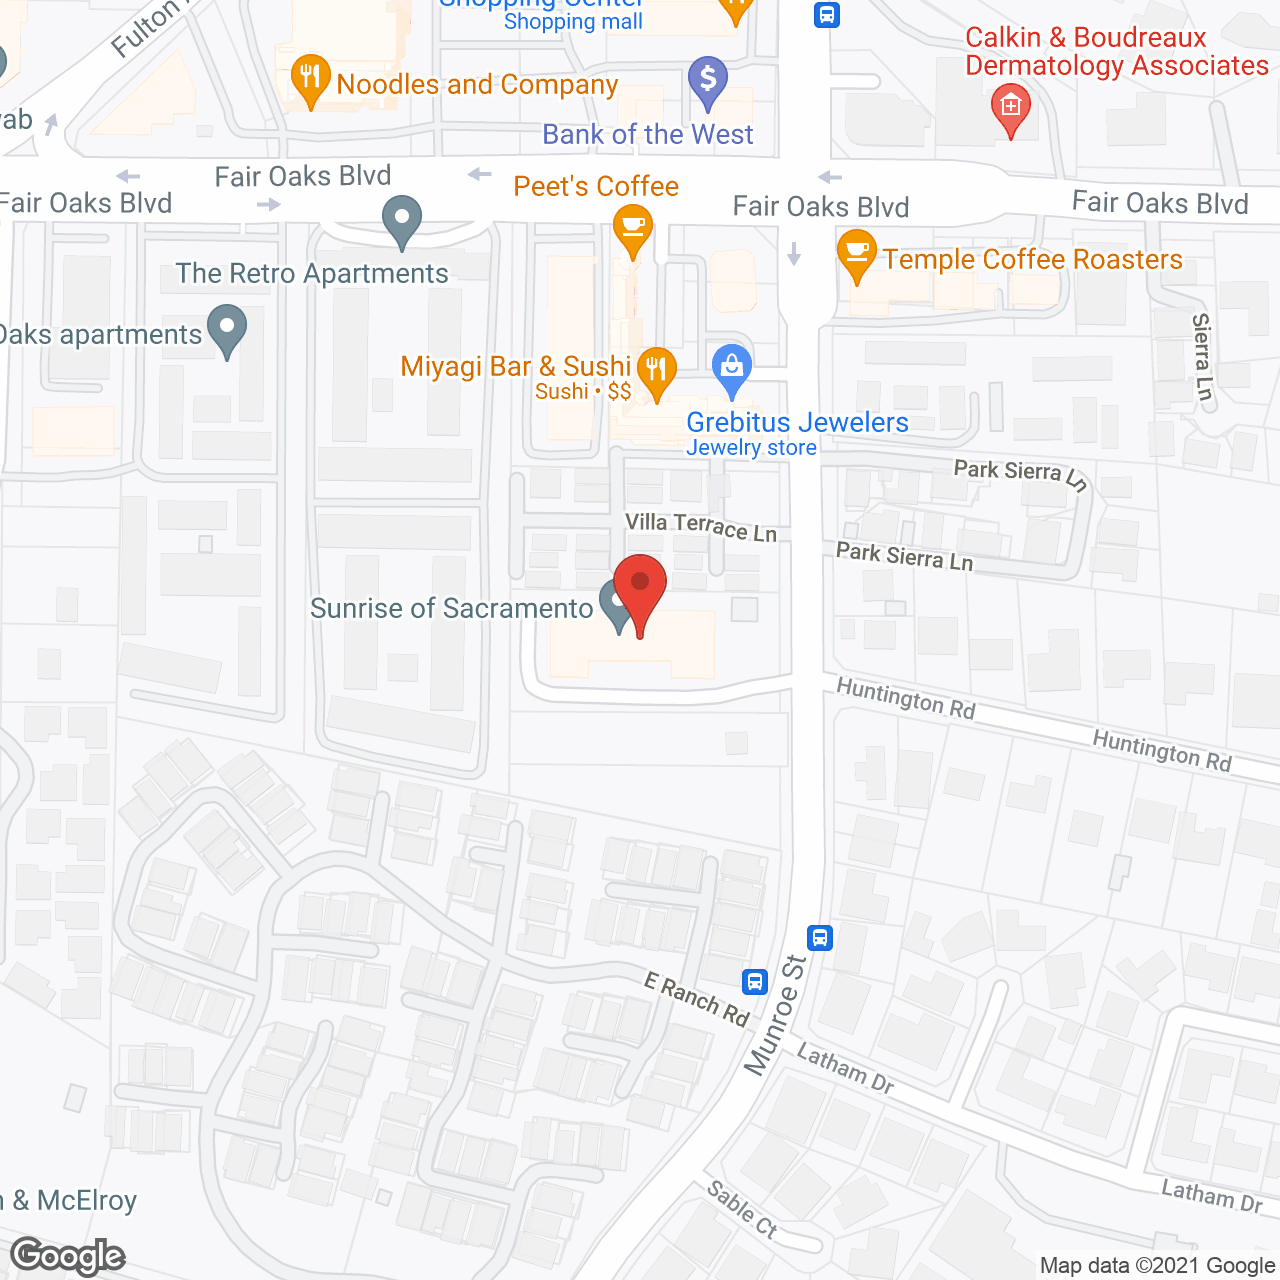 Sunrise of Sacramento in google map